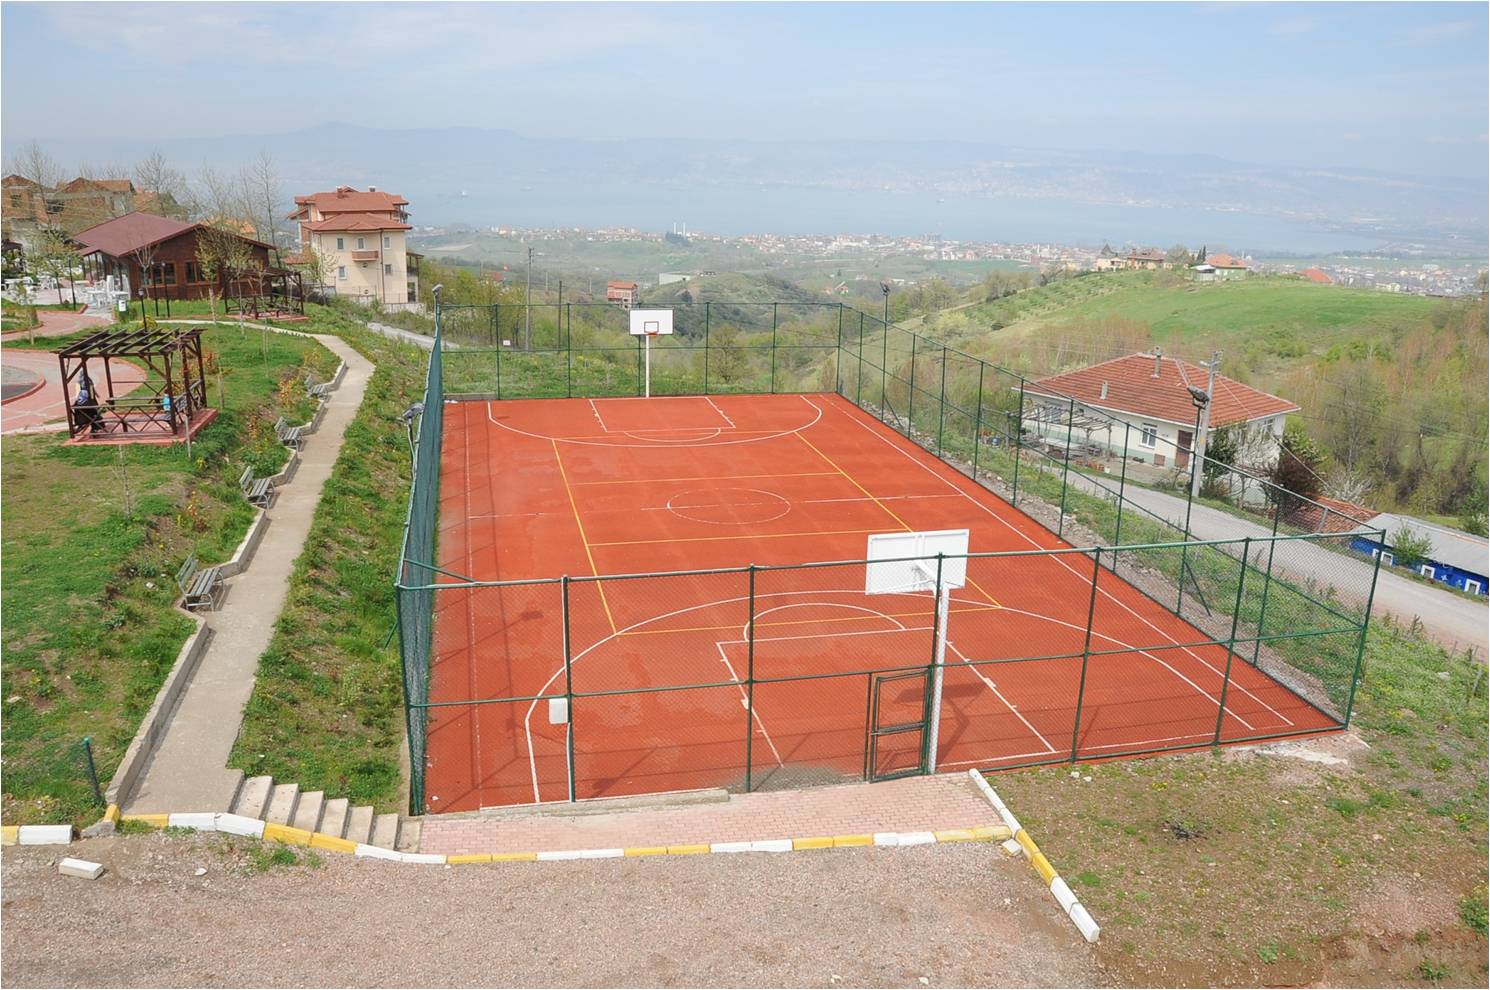 Manzara Park Basketbol-Voleybol-Tenis Sahas